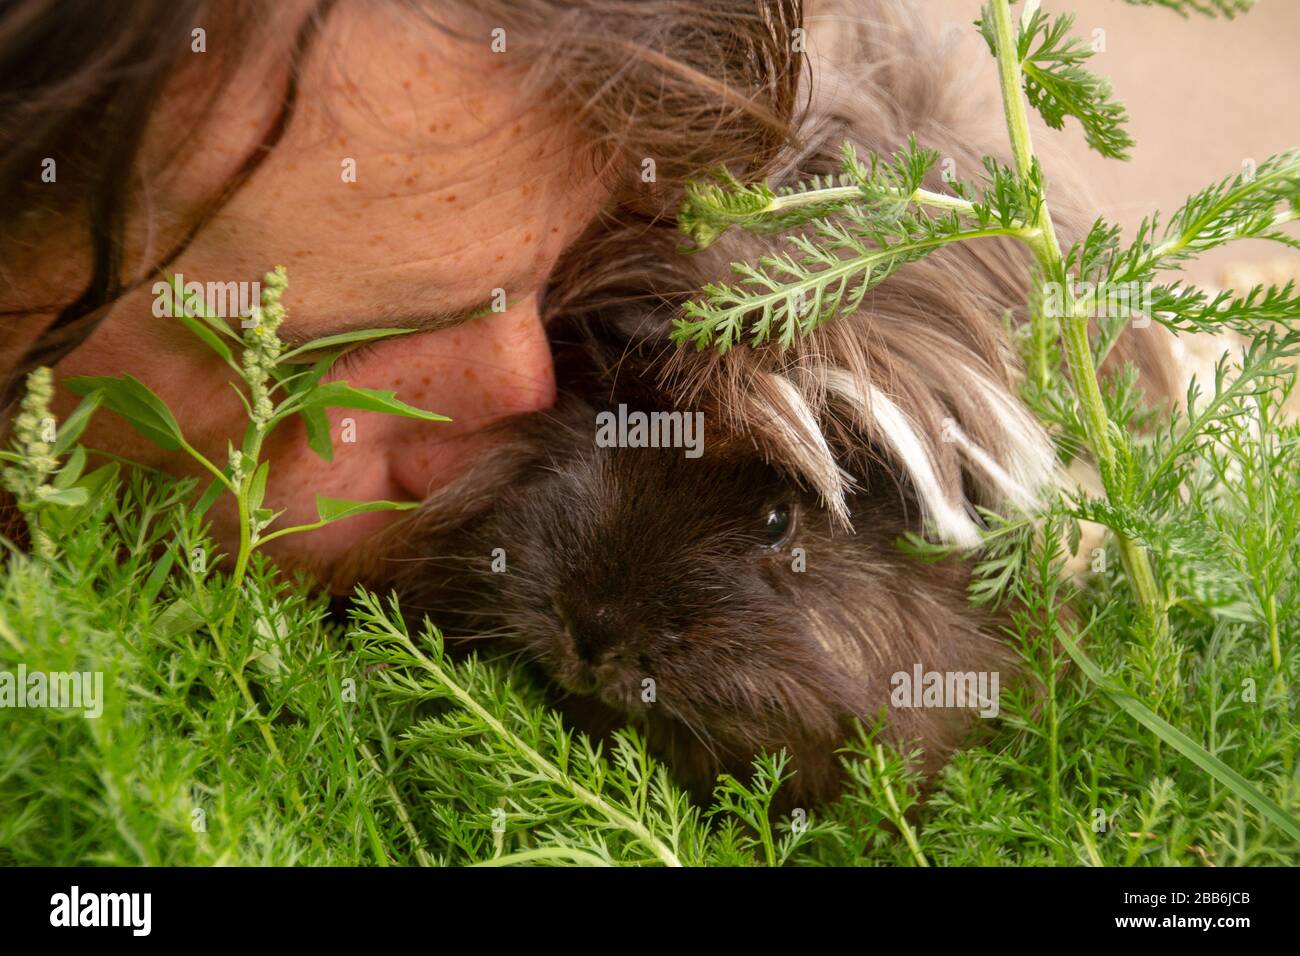 Hombre besando a un cerdo de quinea Foto de stock